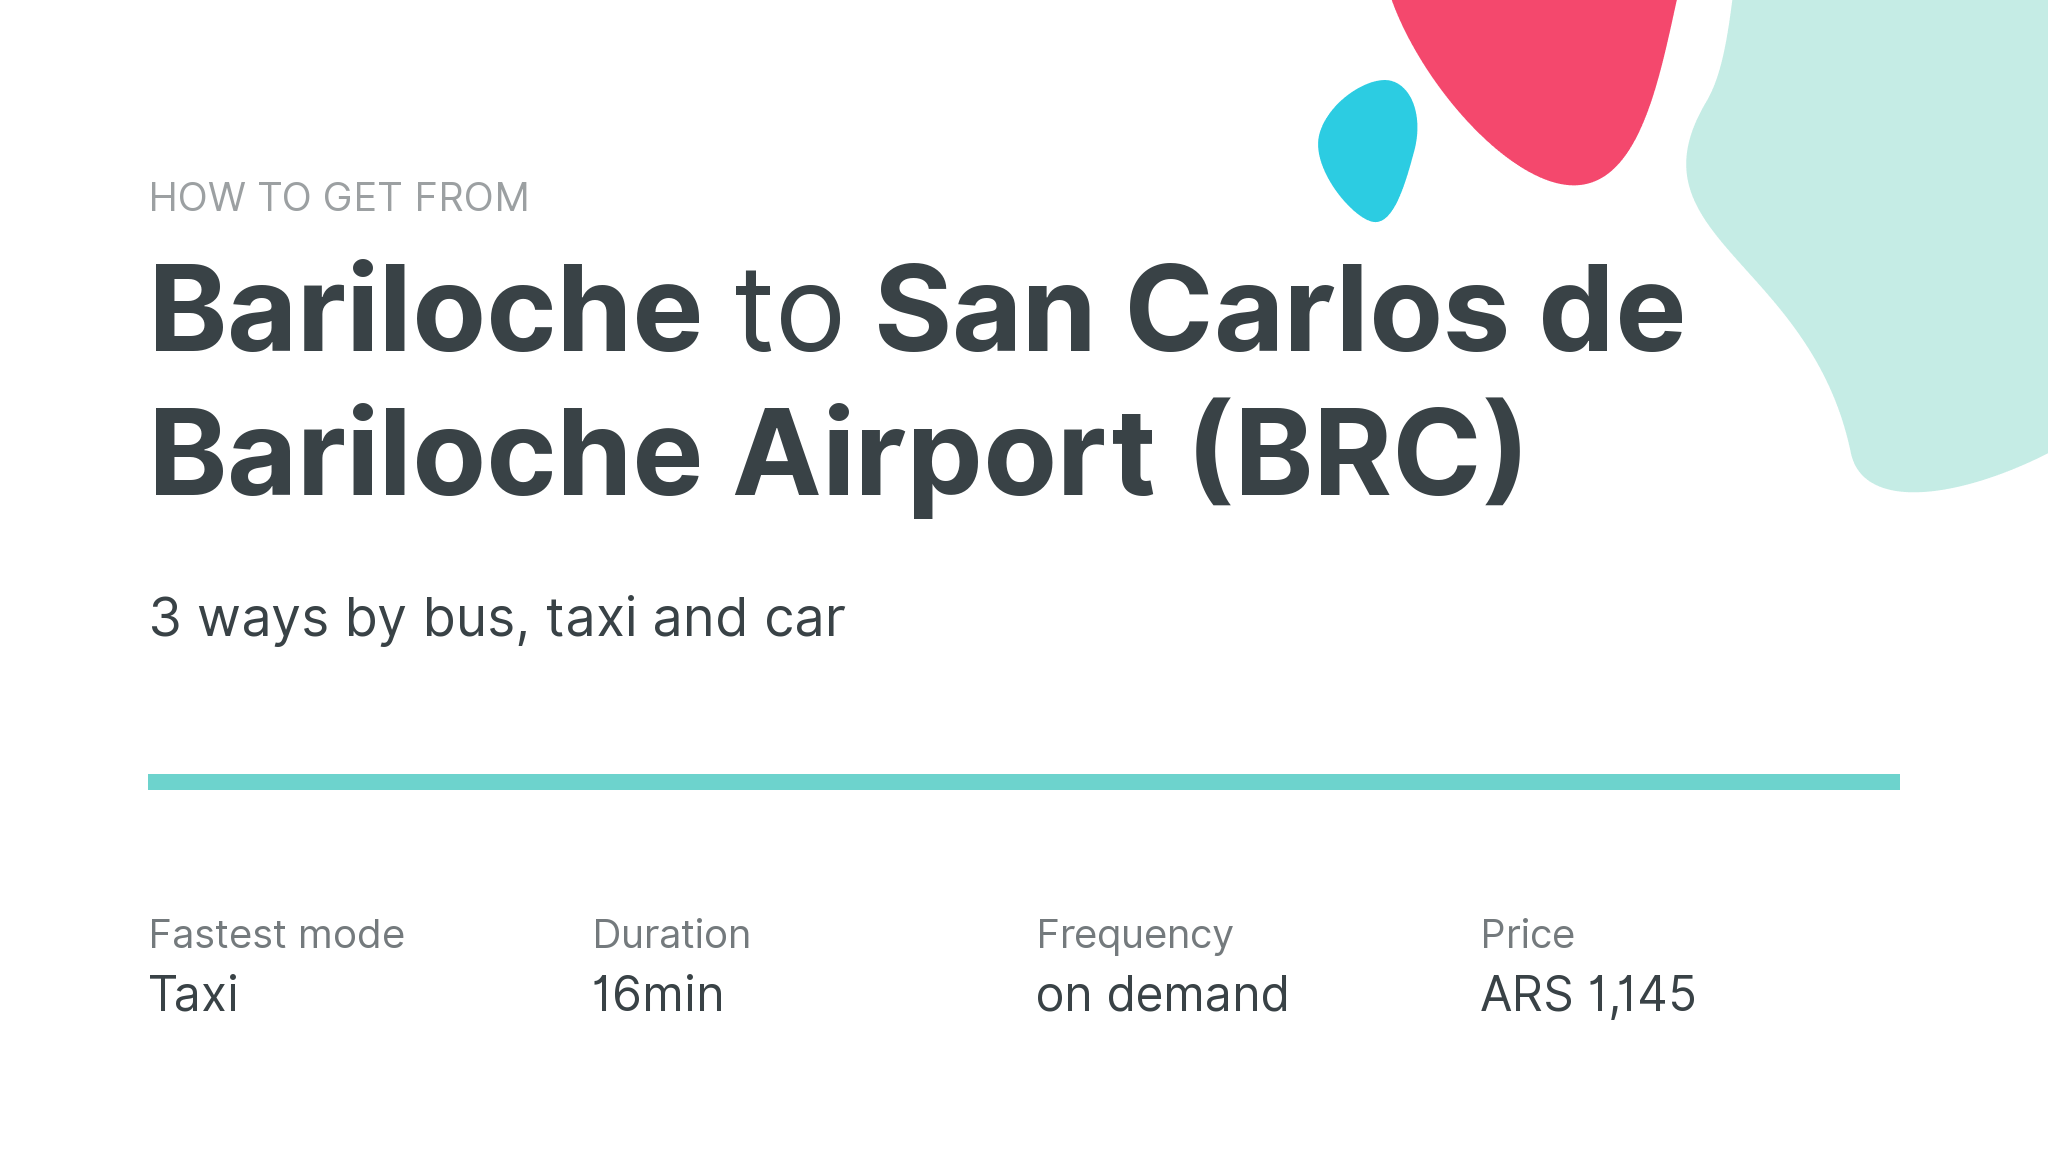 How do I get from Bariloche to San Carlos de Bariloche Airport (BRC)